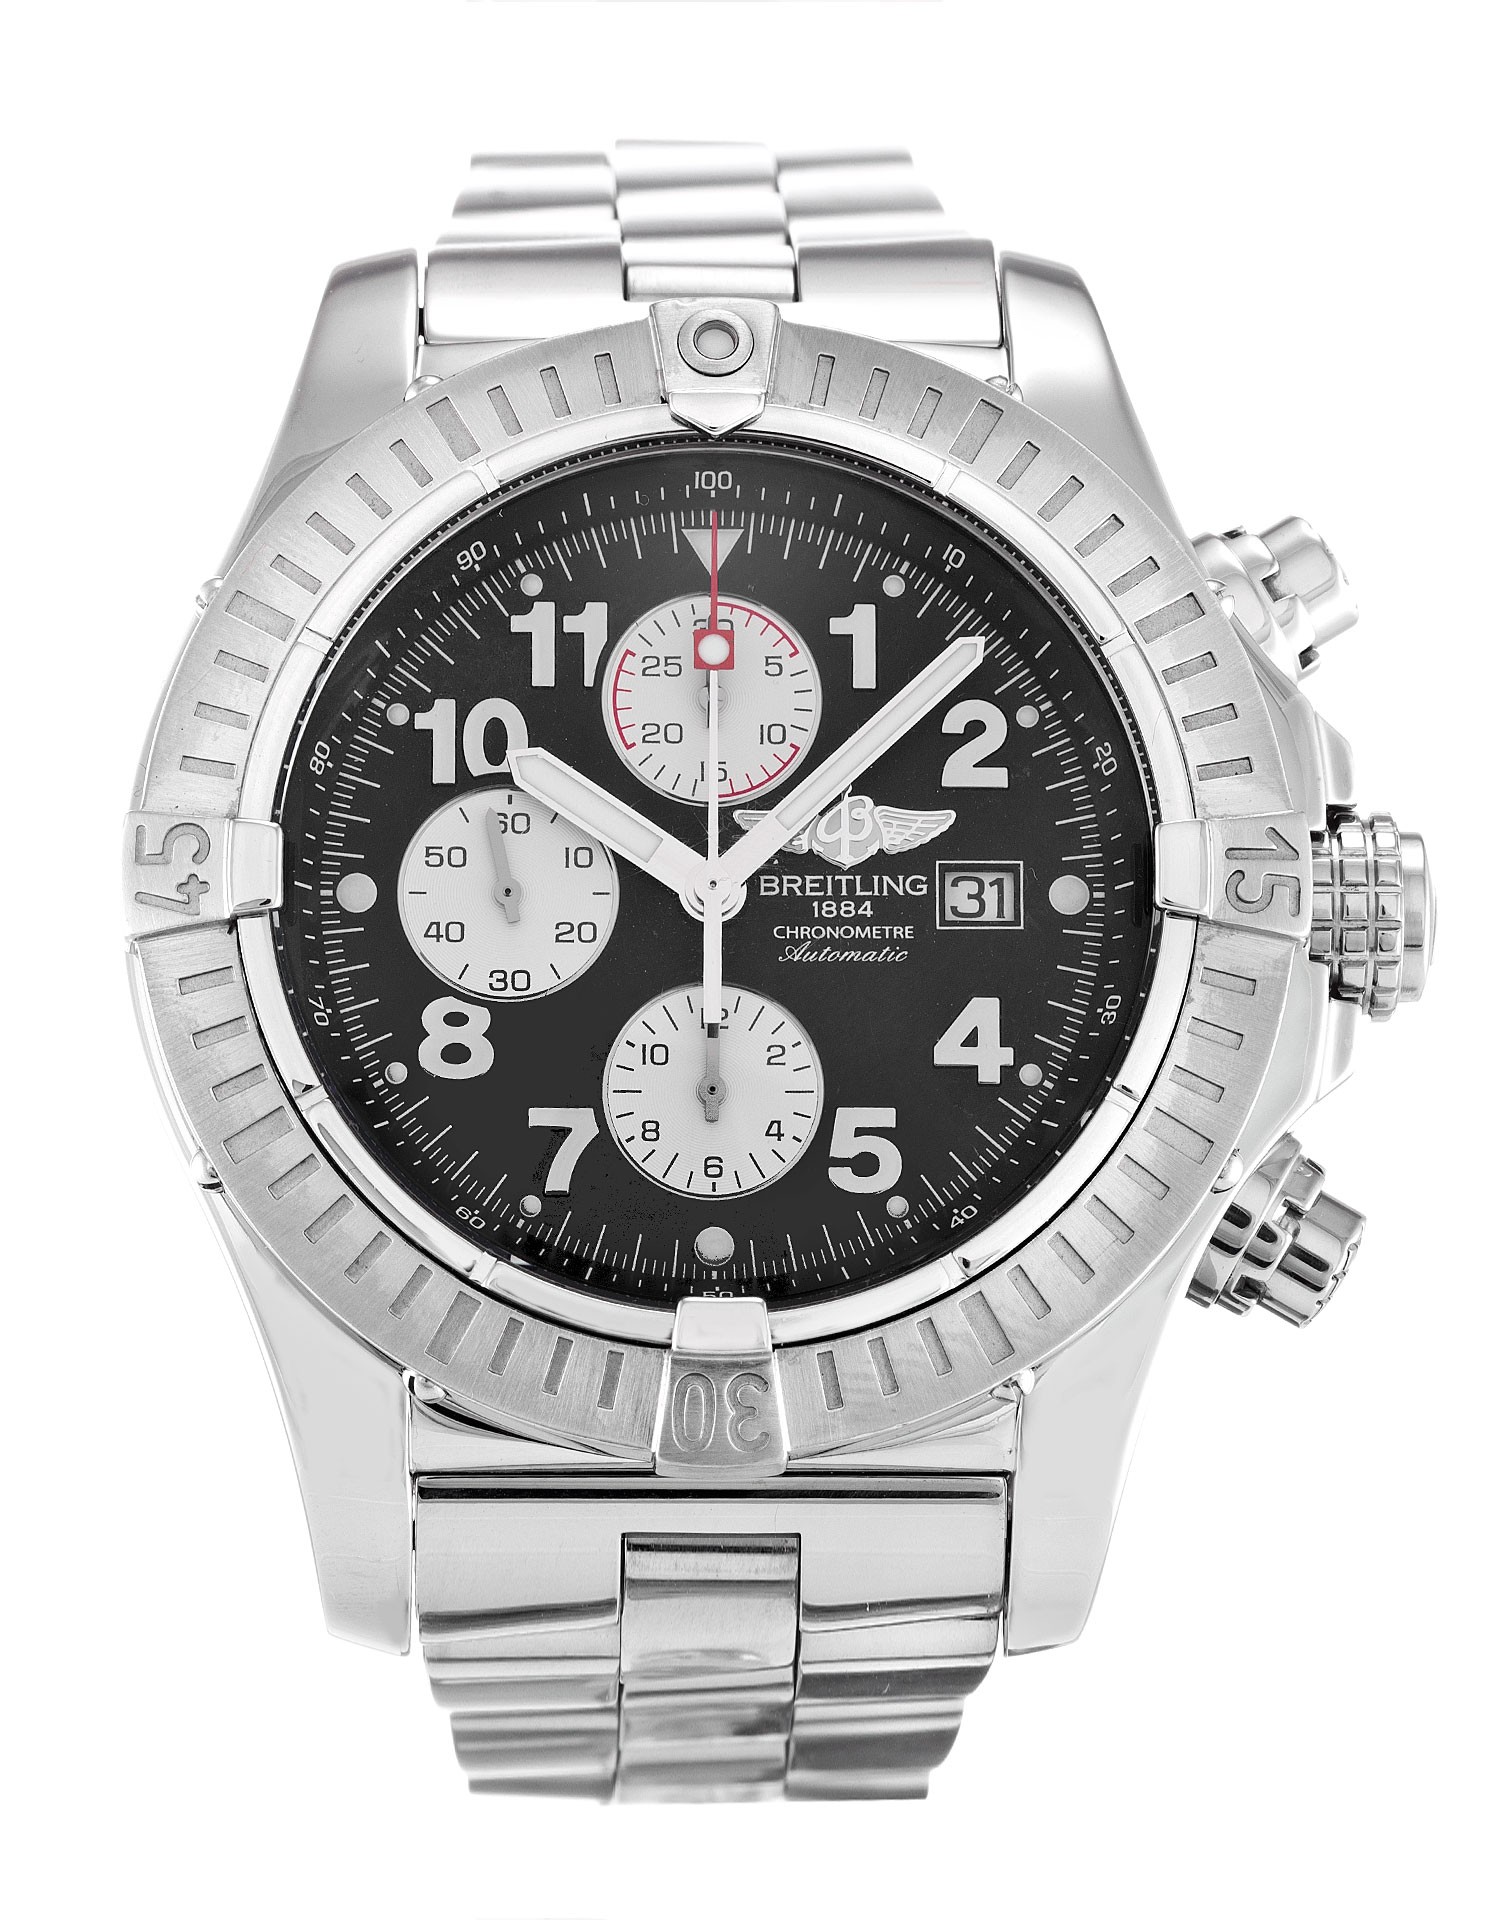 Breitling Replica Uhren Super Avenger A13370-48.4 MM